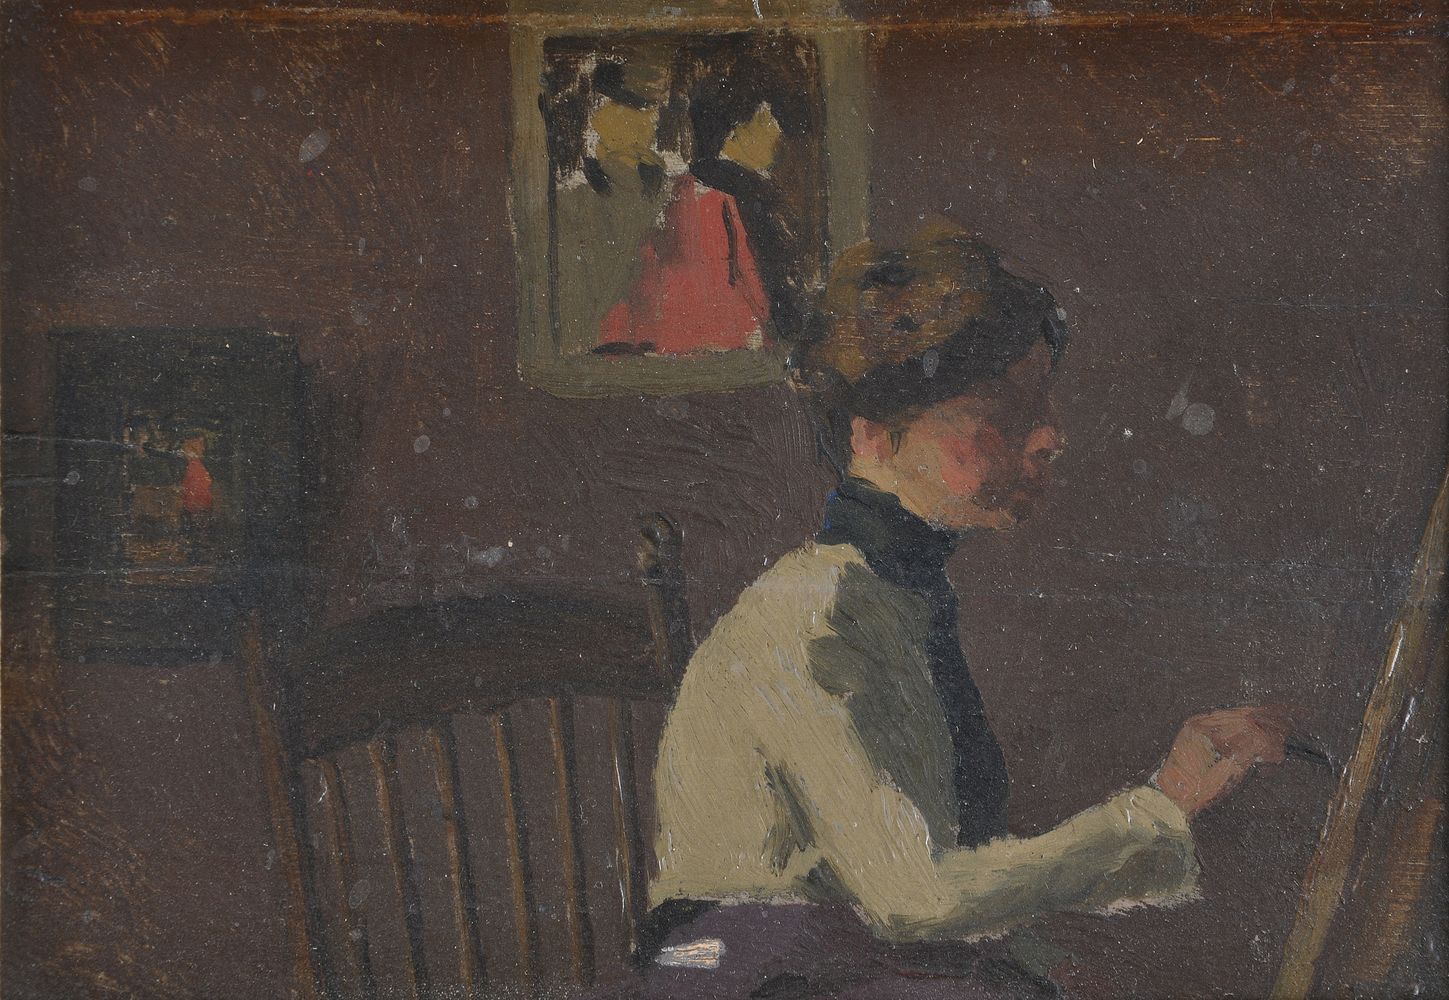 Camden School (c. 1910), Portrait of artist, possibly Sylvia Gosse